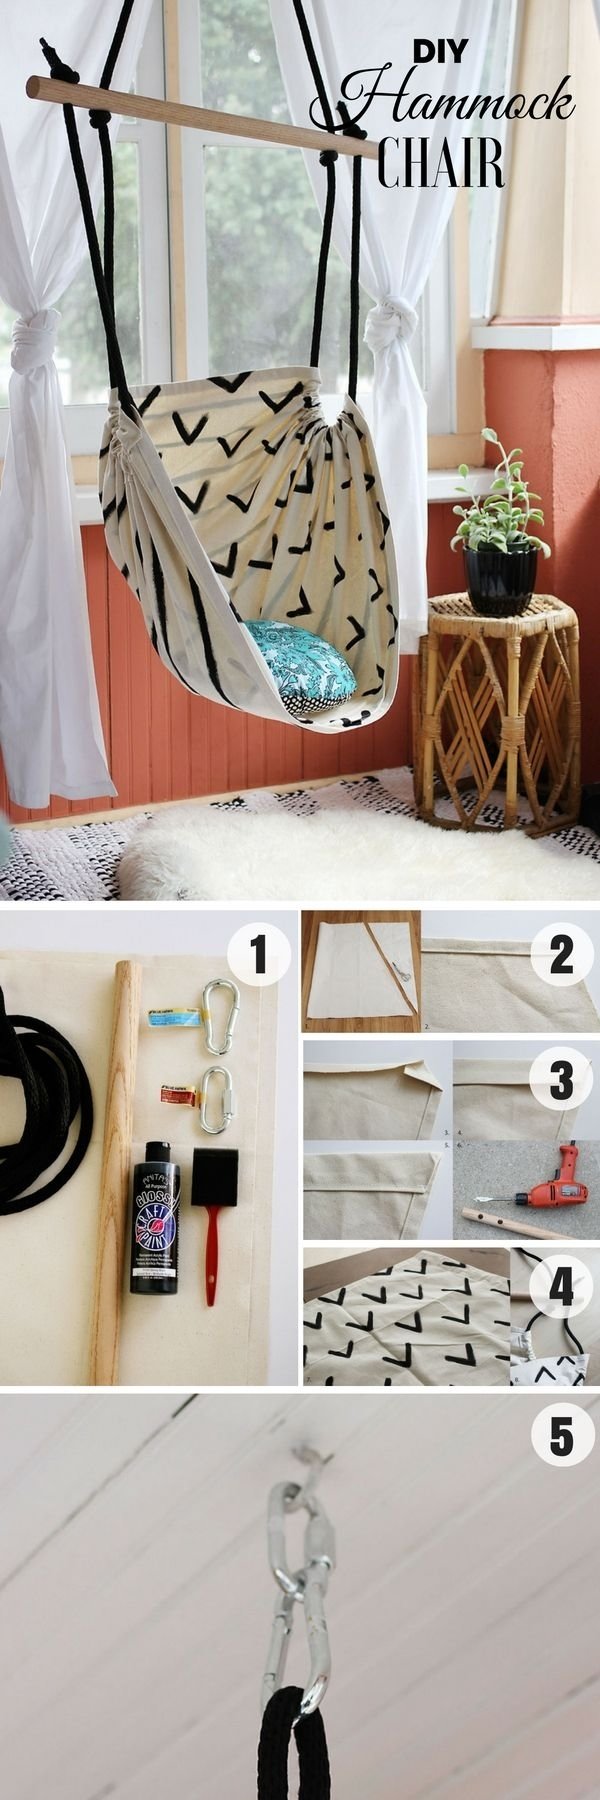 10 Awesome Pinterest Diy Home Decor Ideas 2523 best diy home decor crafts on a budget images on pinterest 2022